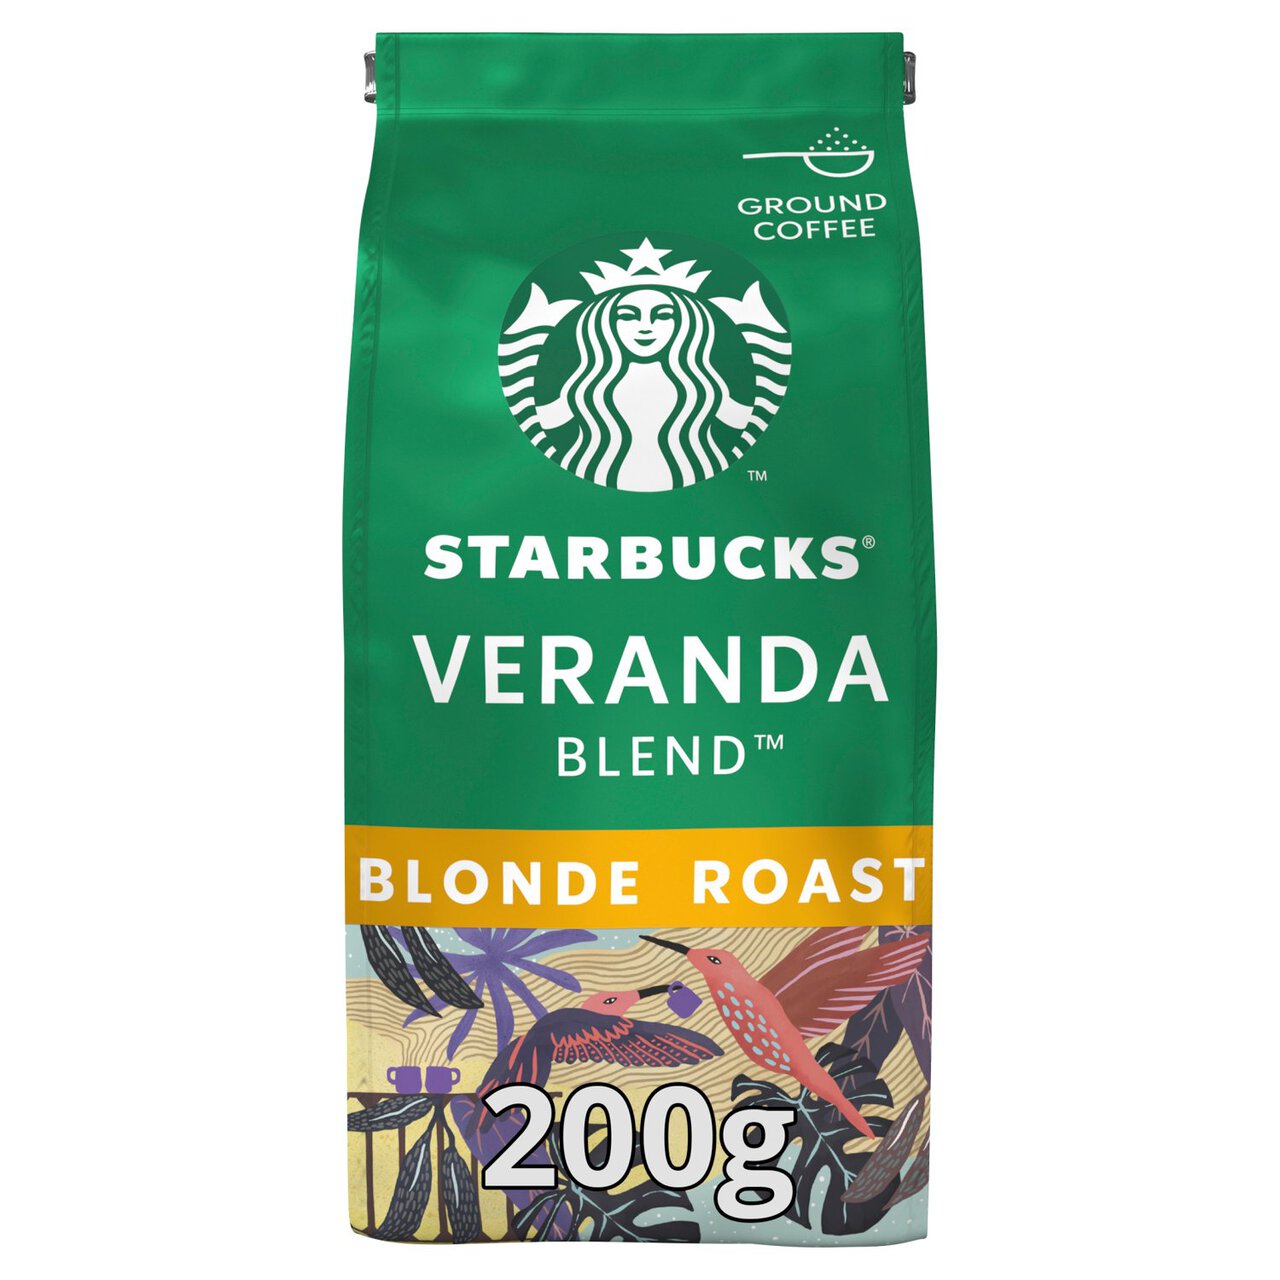 STARBUCKS Veranda Blend, Blonde Roast, Ground Coffee 200g